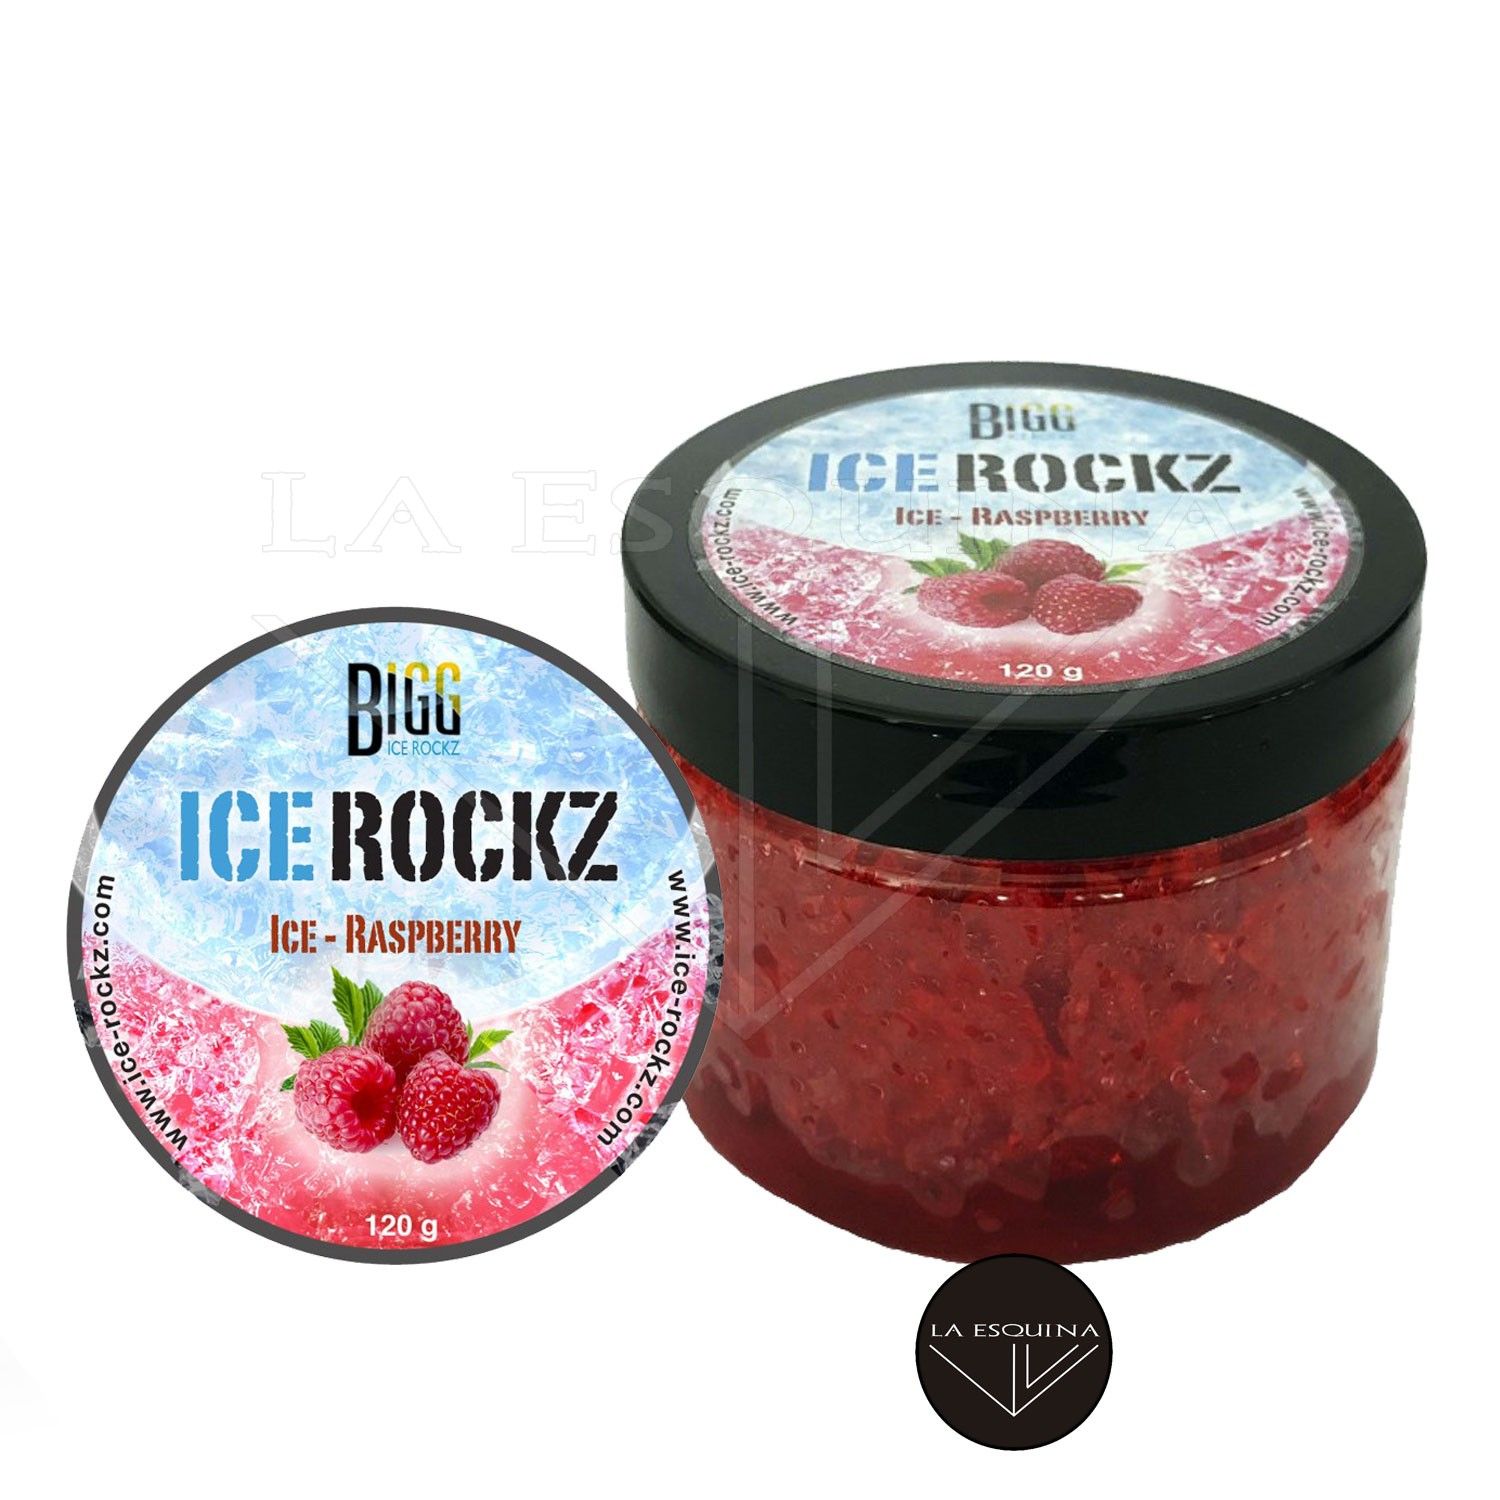 Gel Rock de Cachimba BIGG ICE ROCKZ – 120 g. – Ice-Raspberry